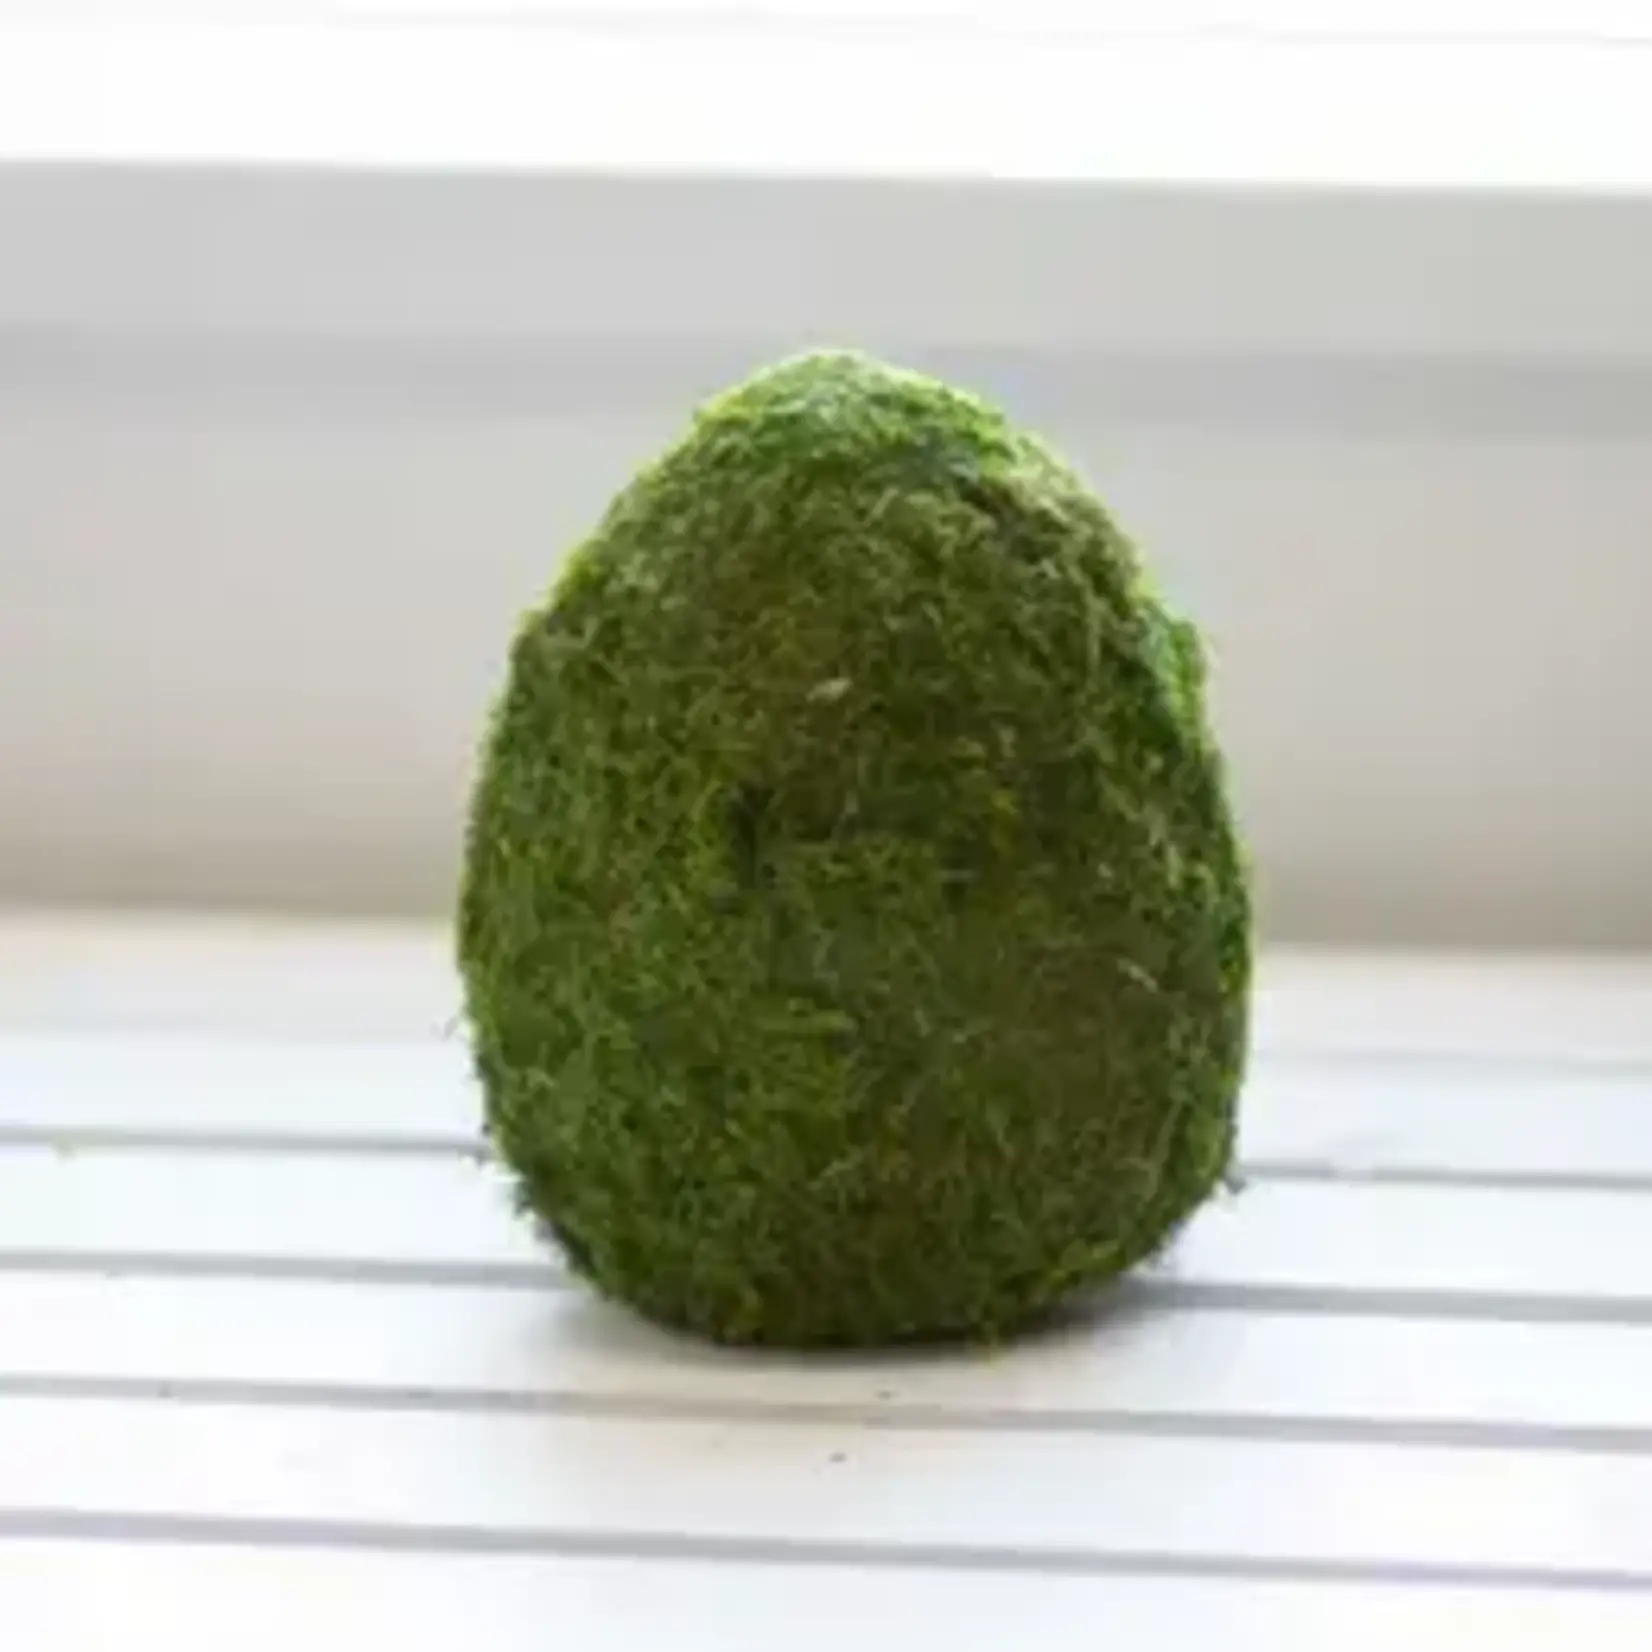 The Royal Standard Moss Egg Decor Green 8"